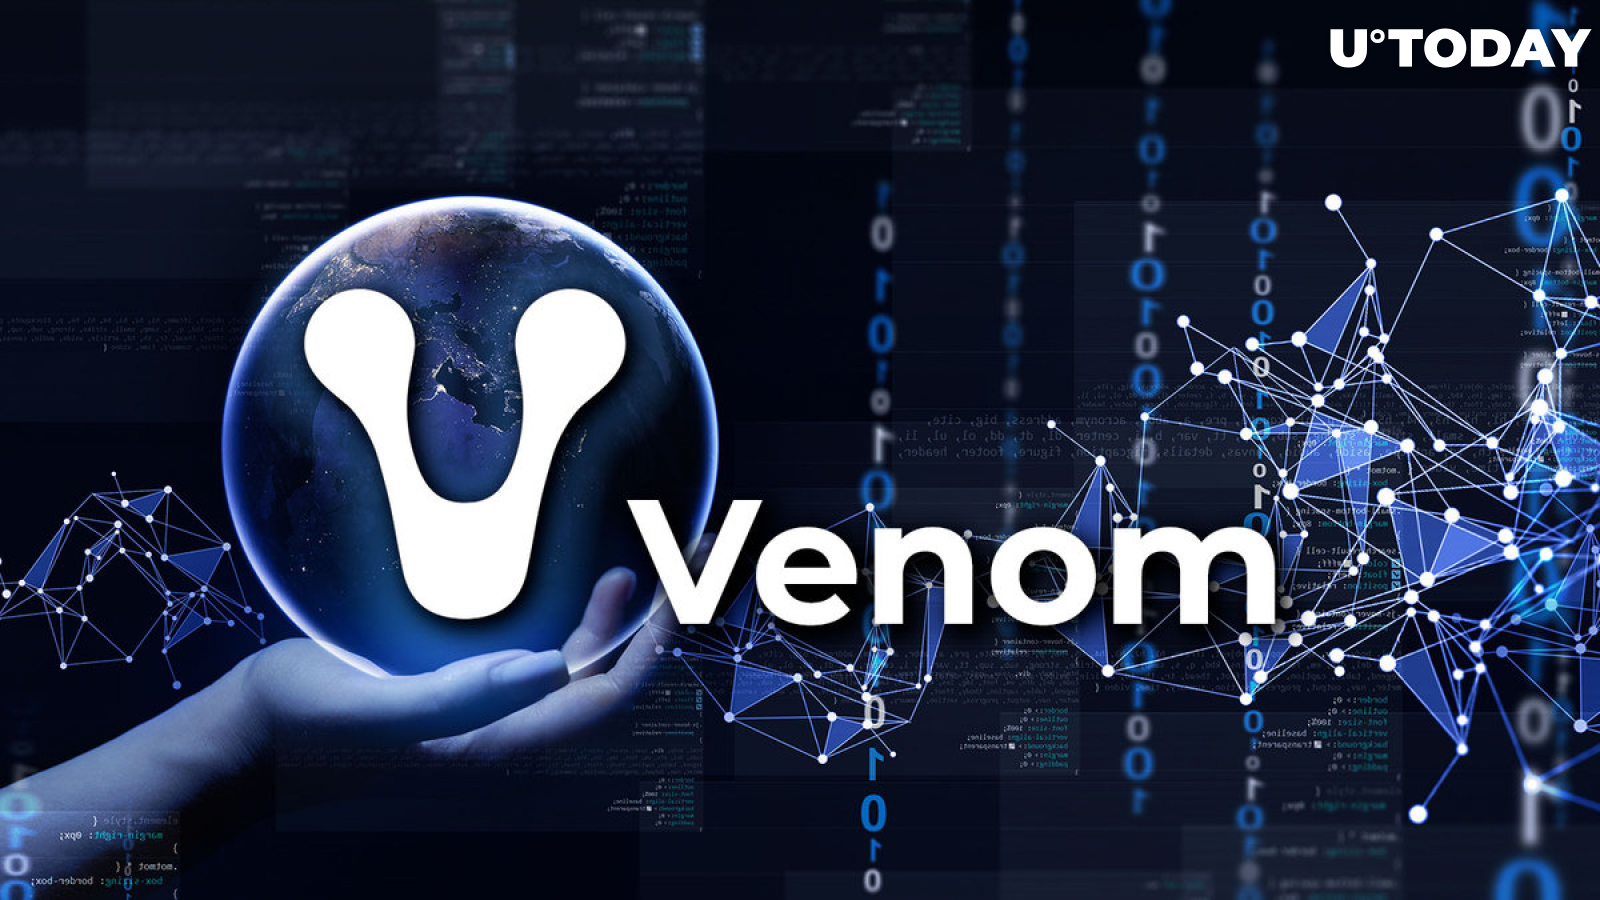 Venom Foundation Scores One Million Registered Accounts: Details